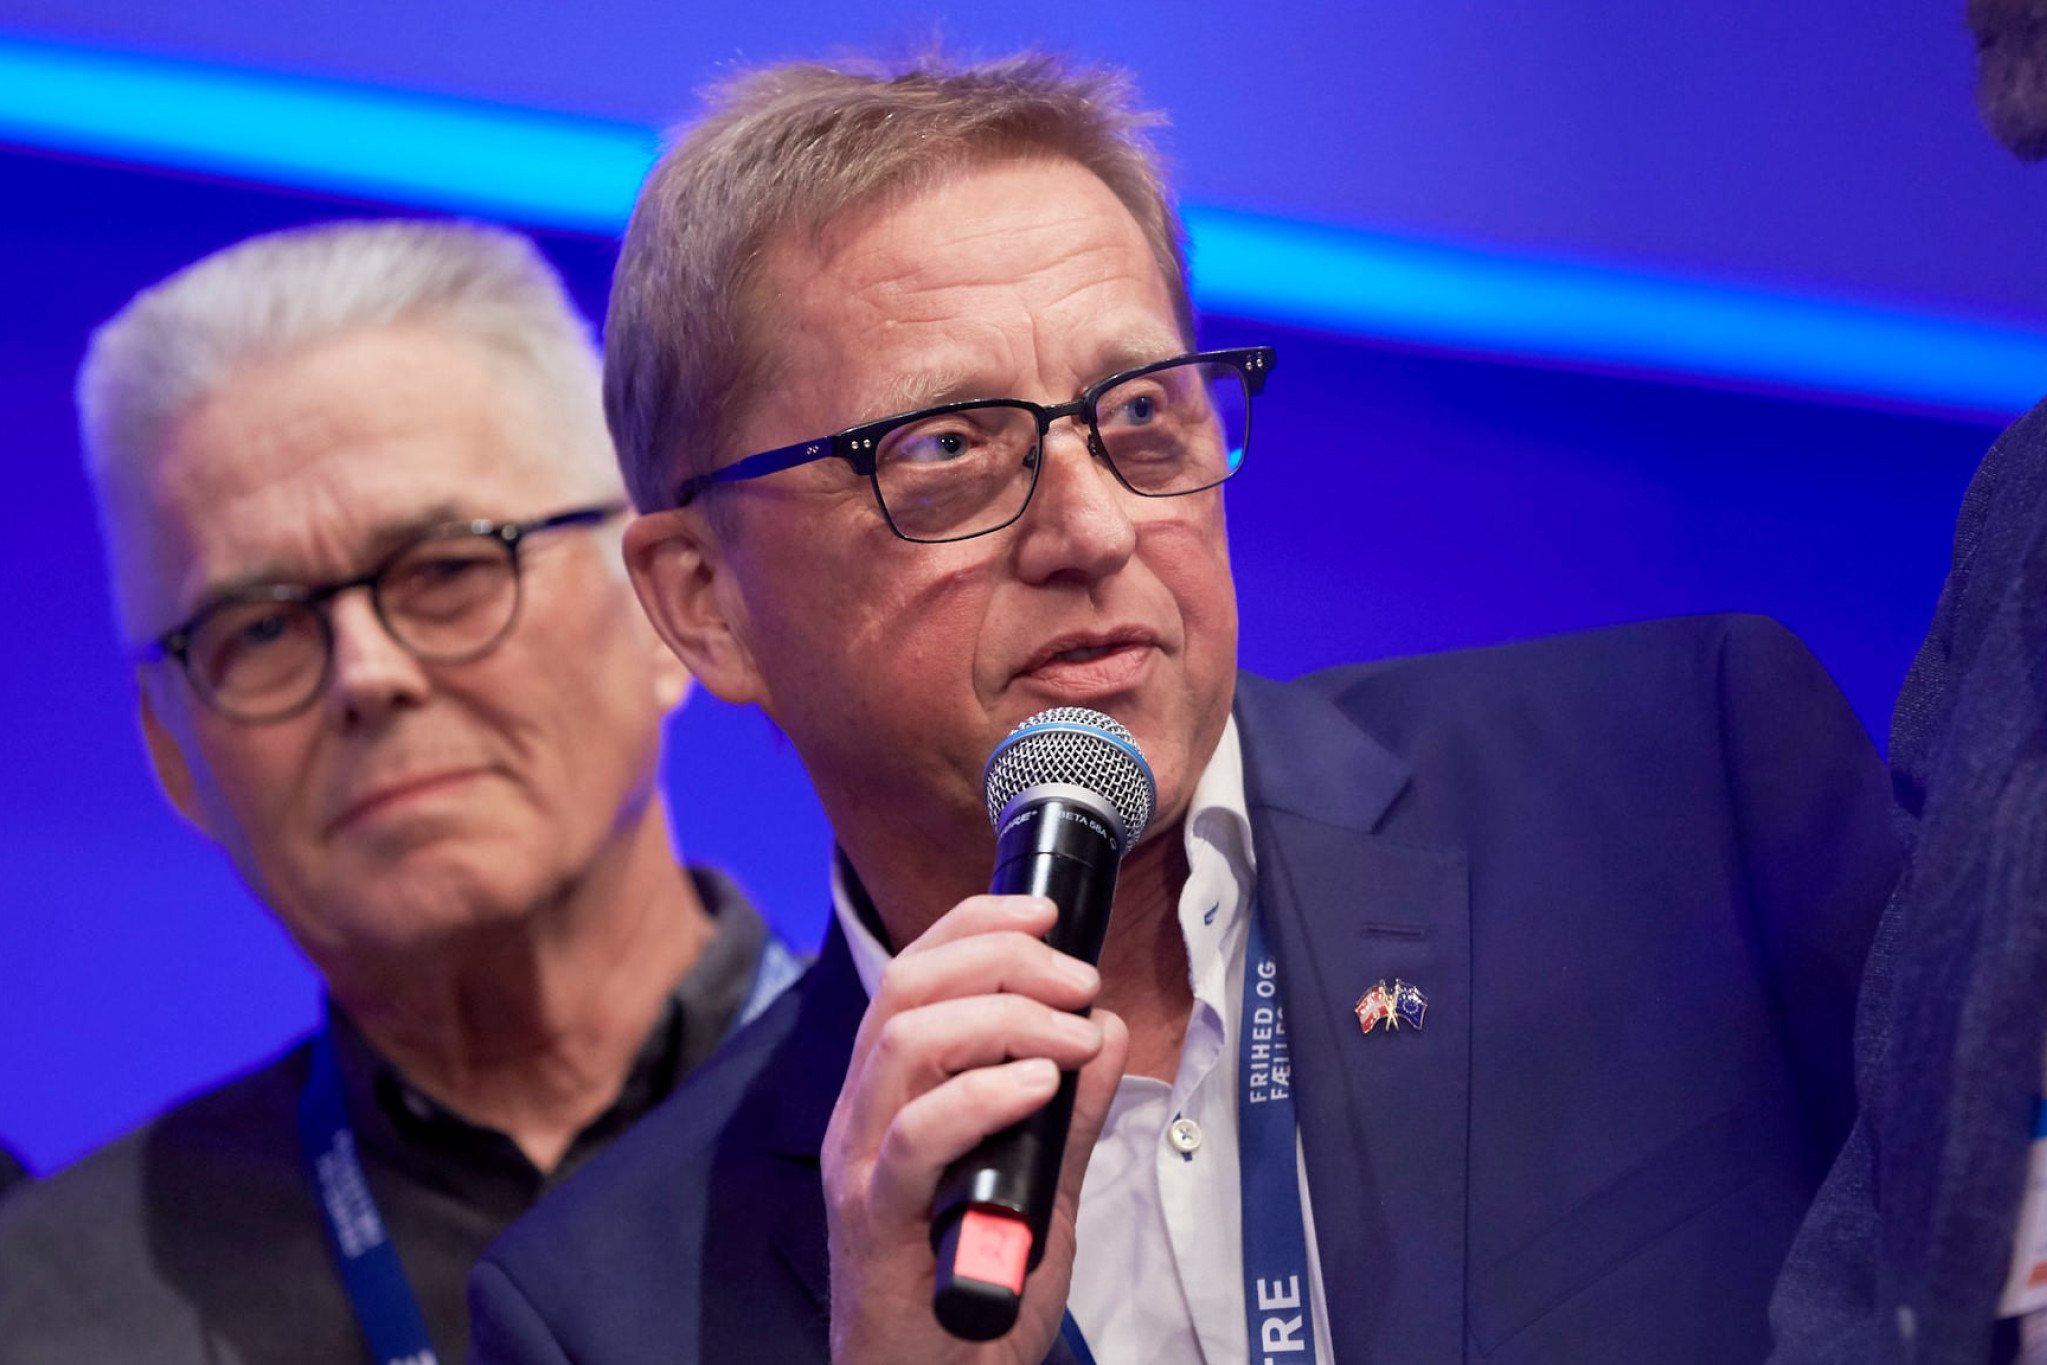 Asger Christensen EU-parlamentariker for Venstre taler i en mikrofon